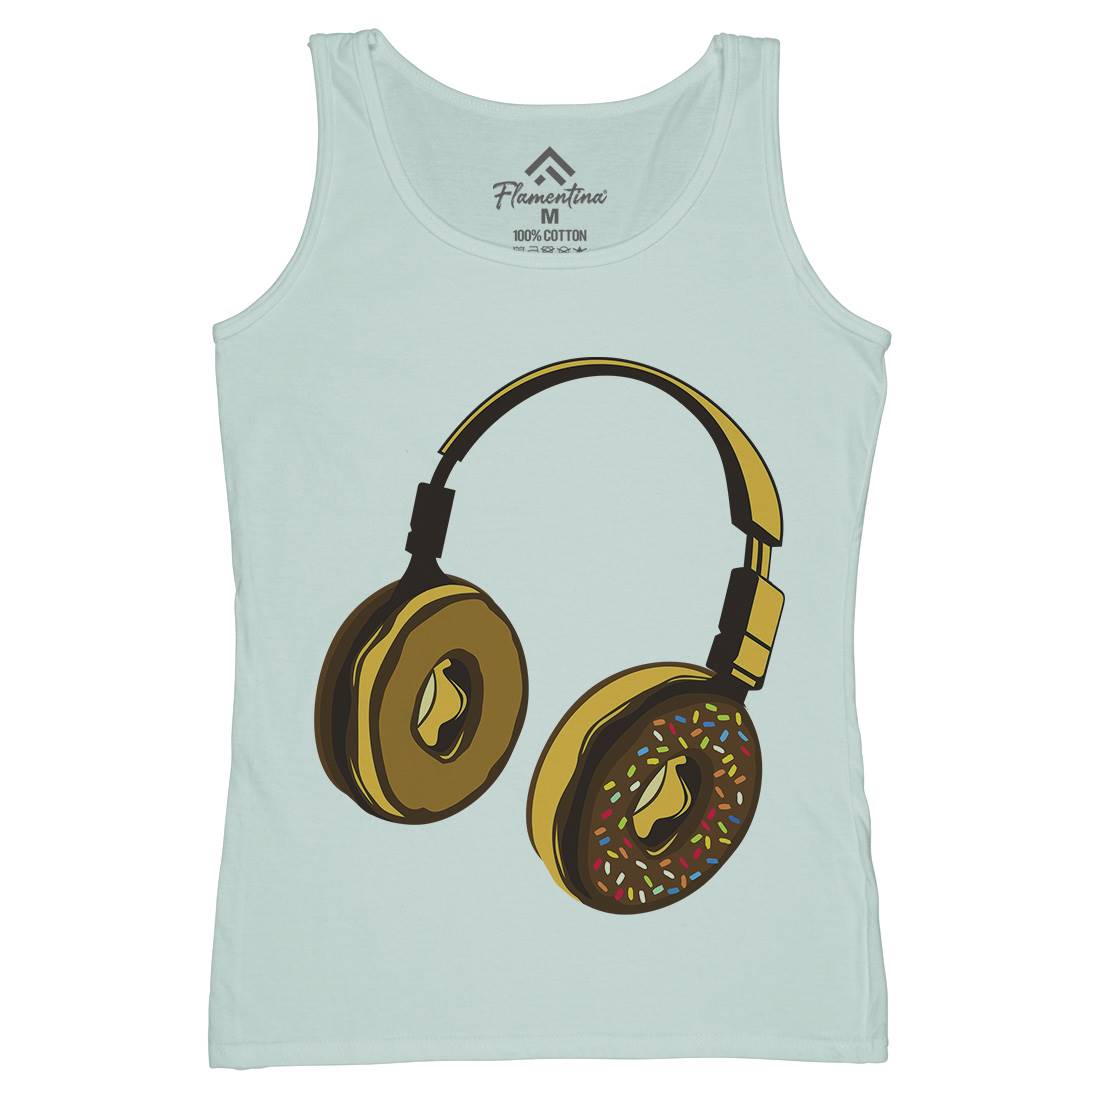 Headphone Donut Womens Organic Tank Top Vest Music B050